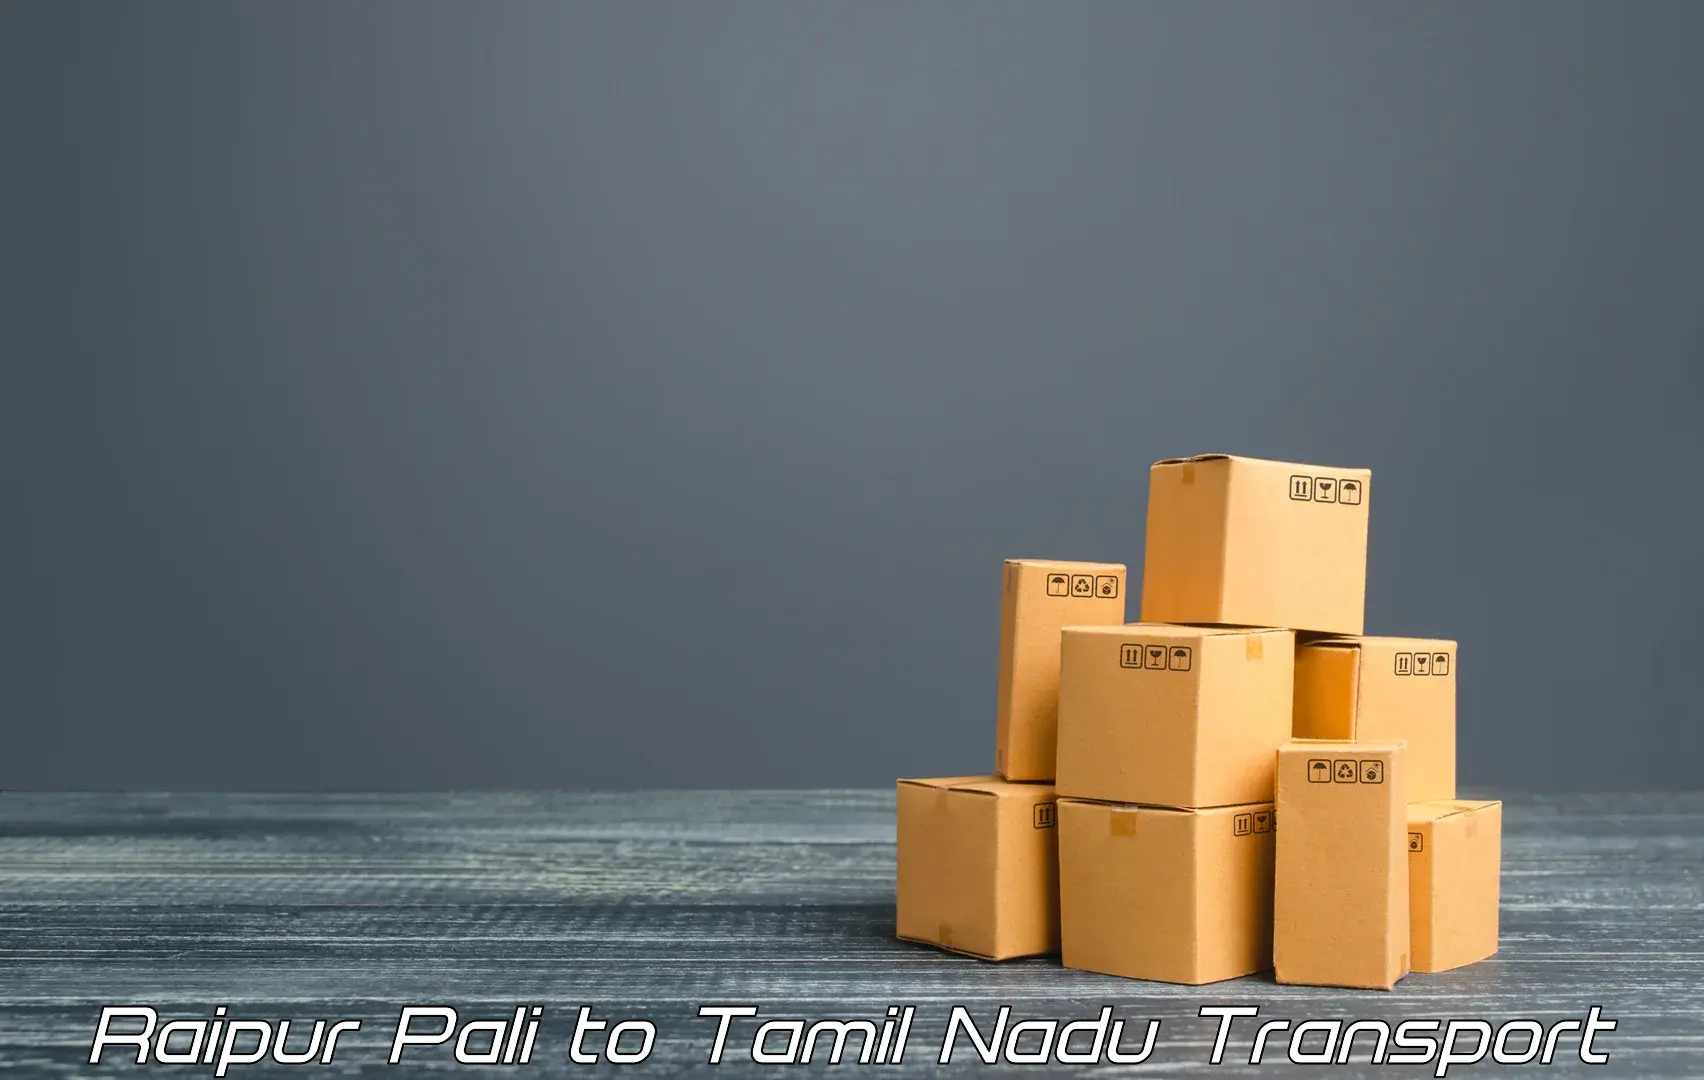 Container transport service Raipur Pali to Cuddalore